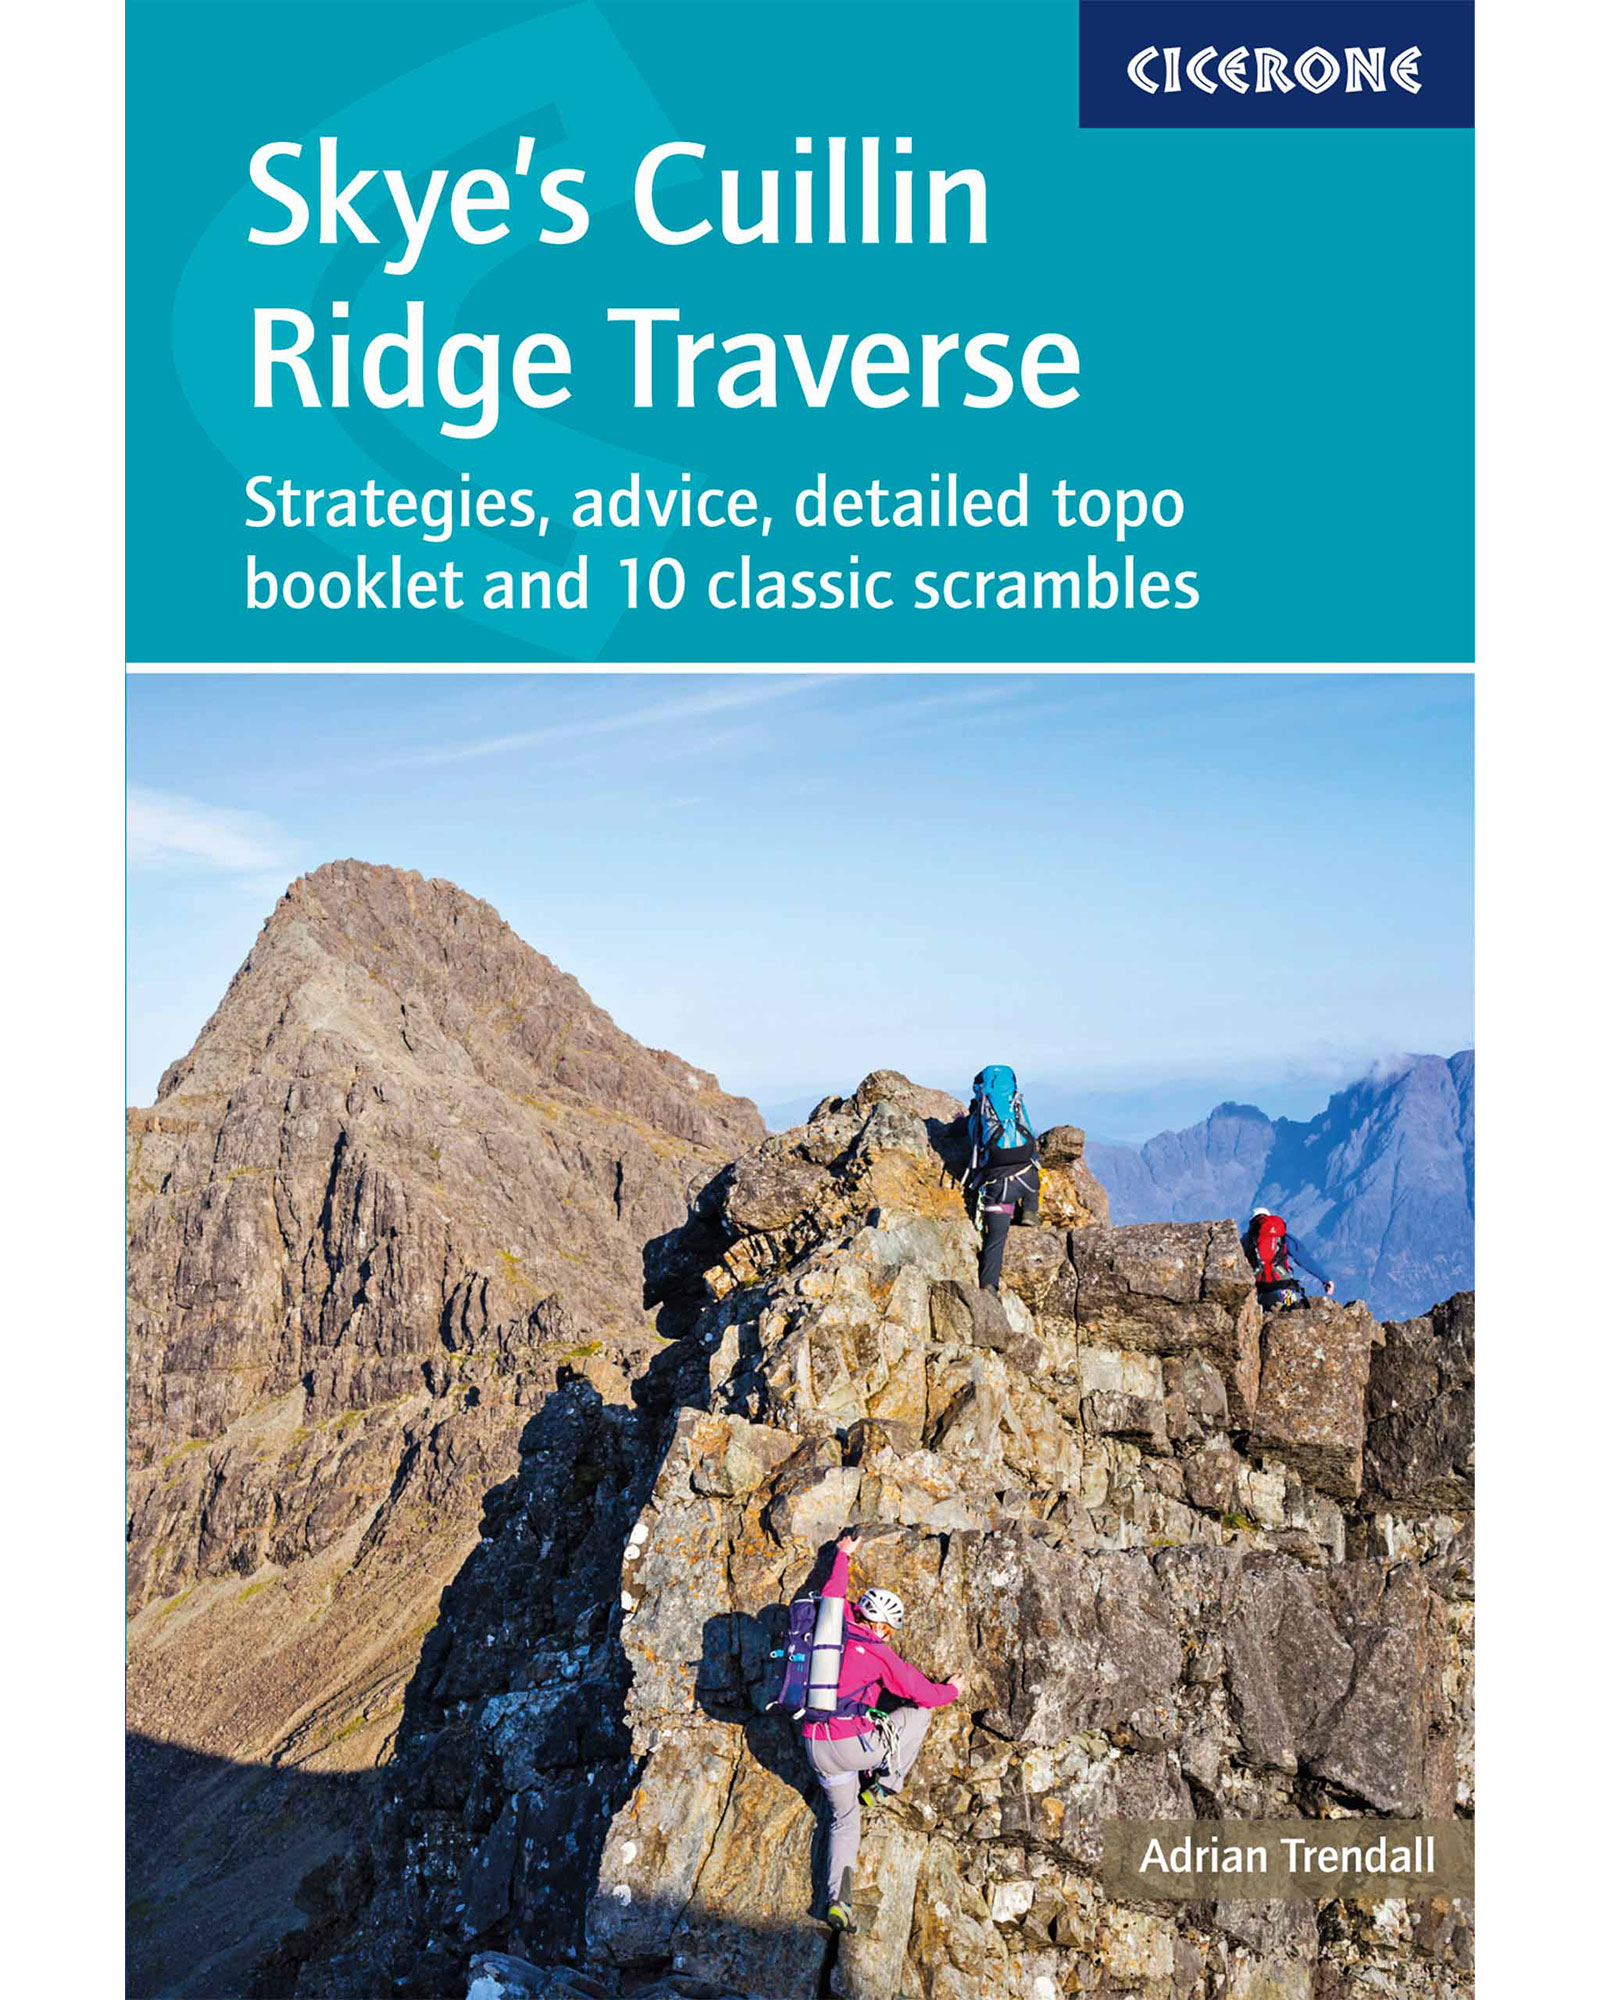 Cicerone Skye’s Cuillin Ridge Traverse Guide Book